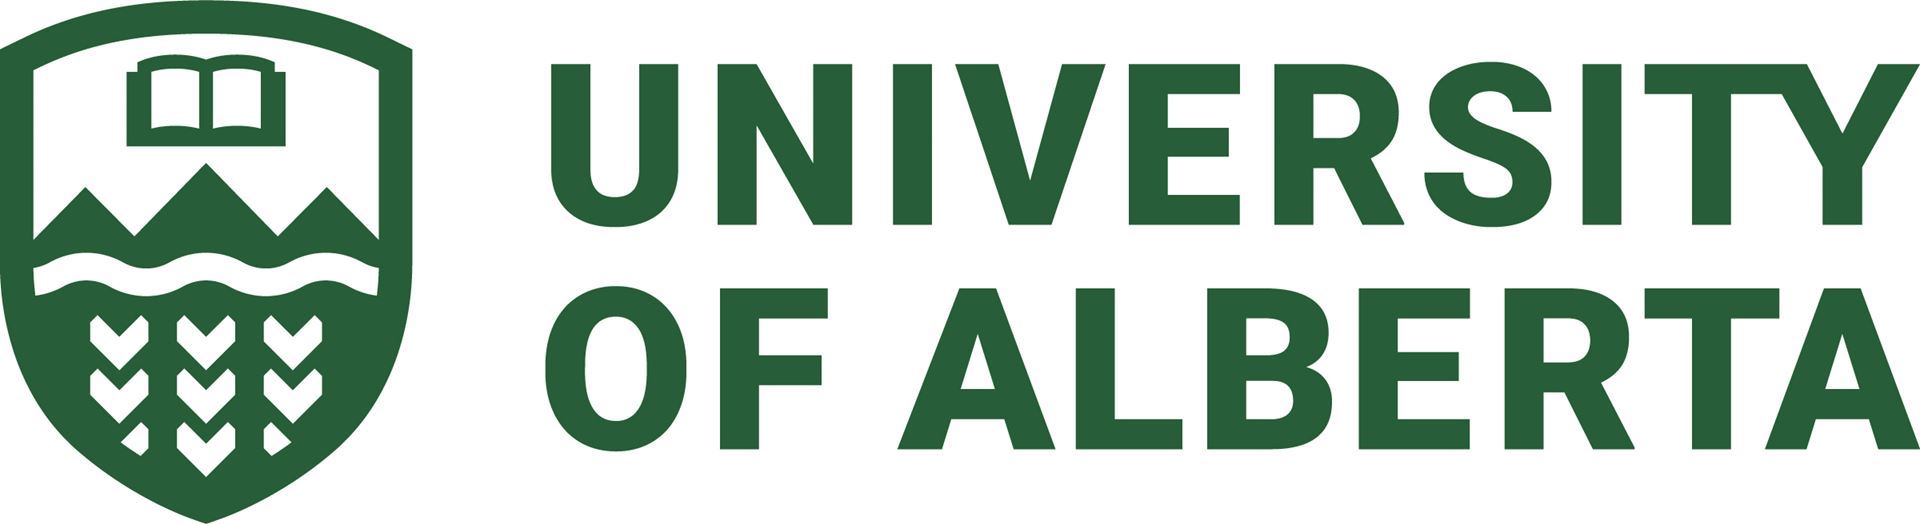 University of Alberta logo forest green